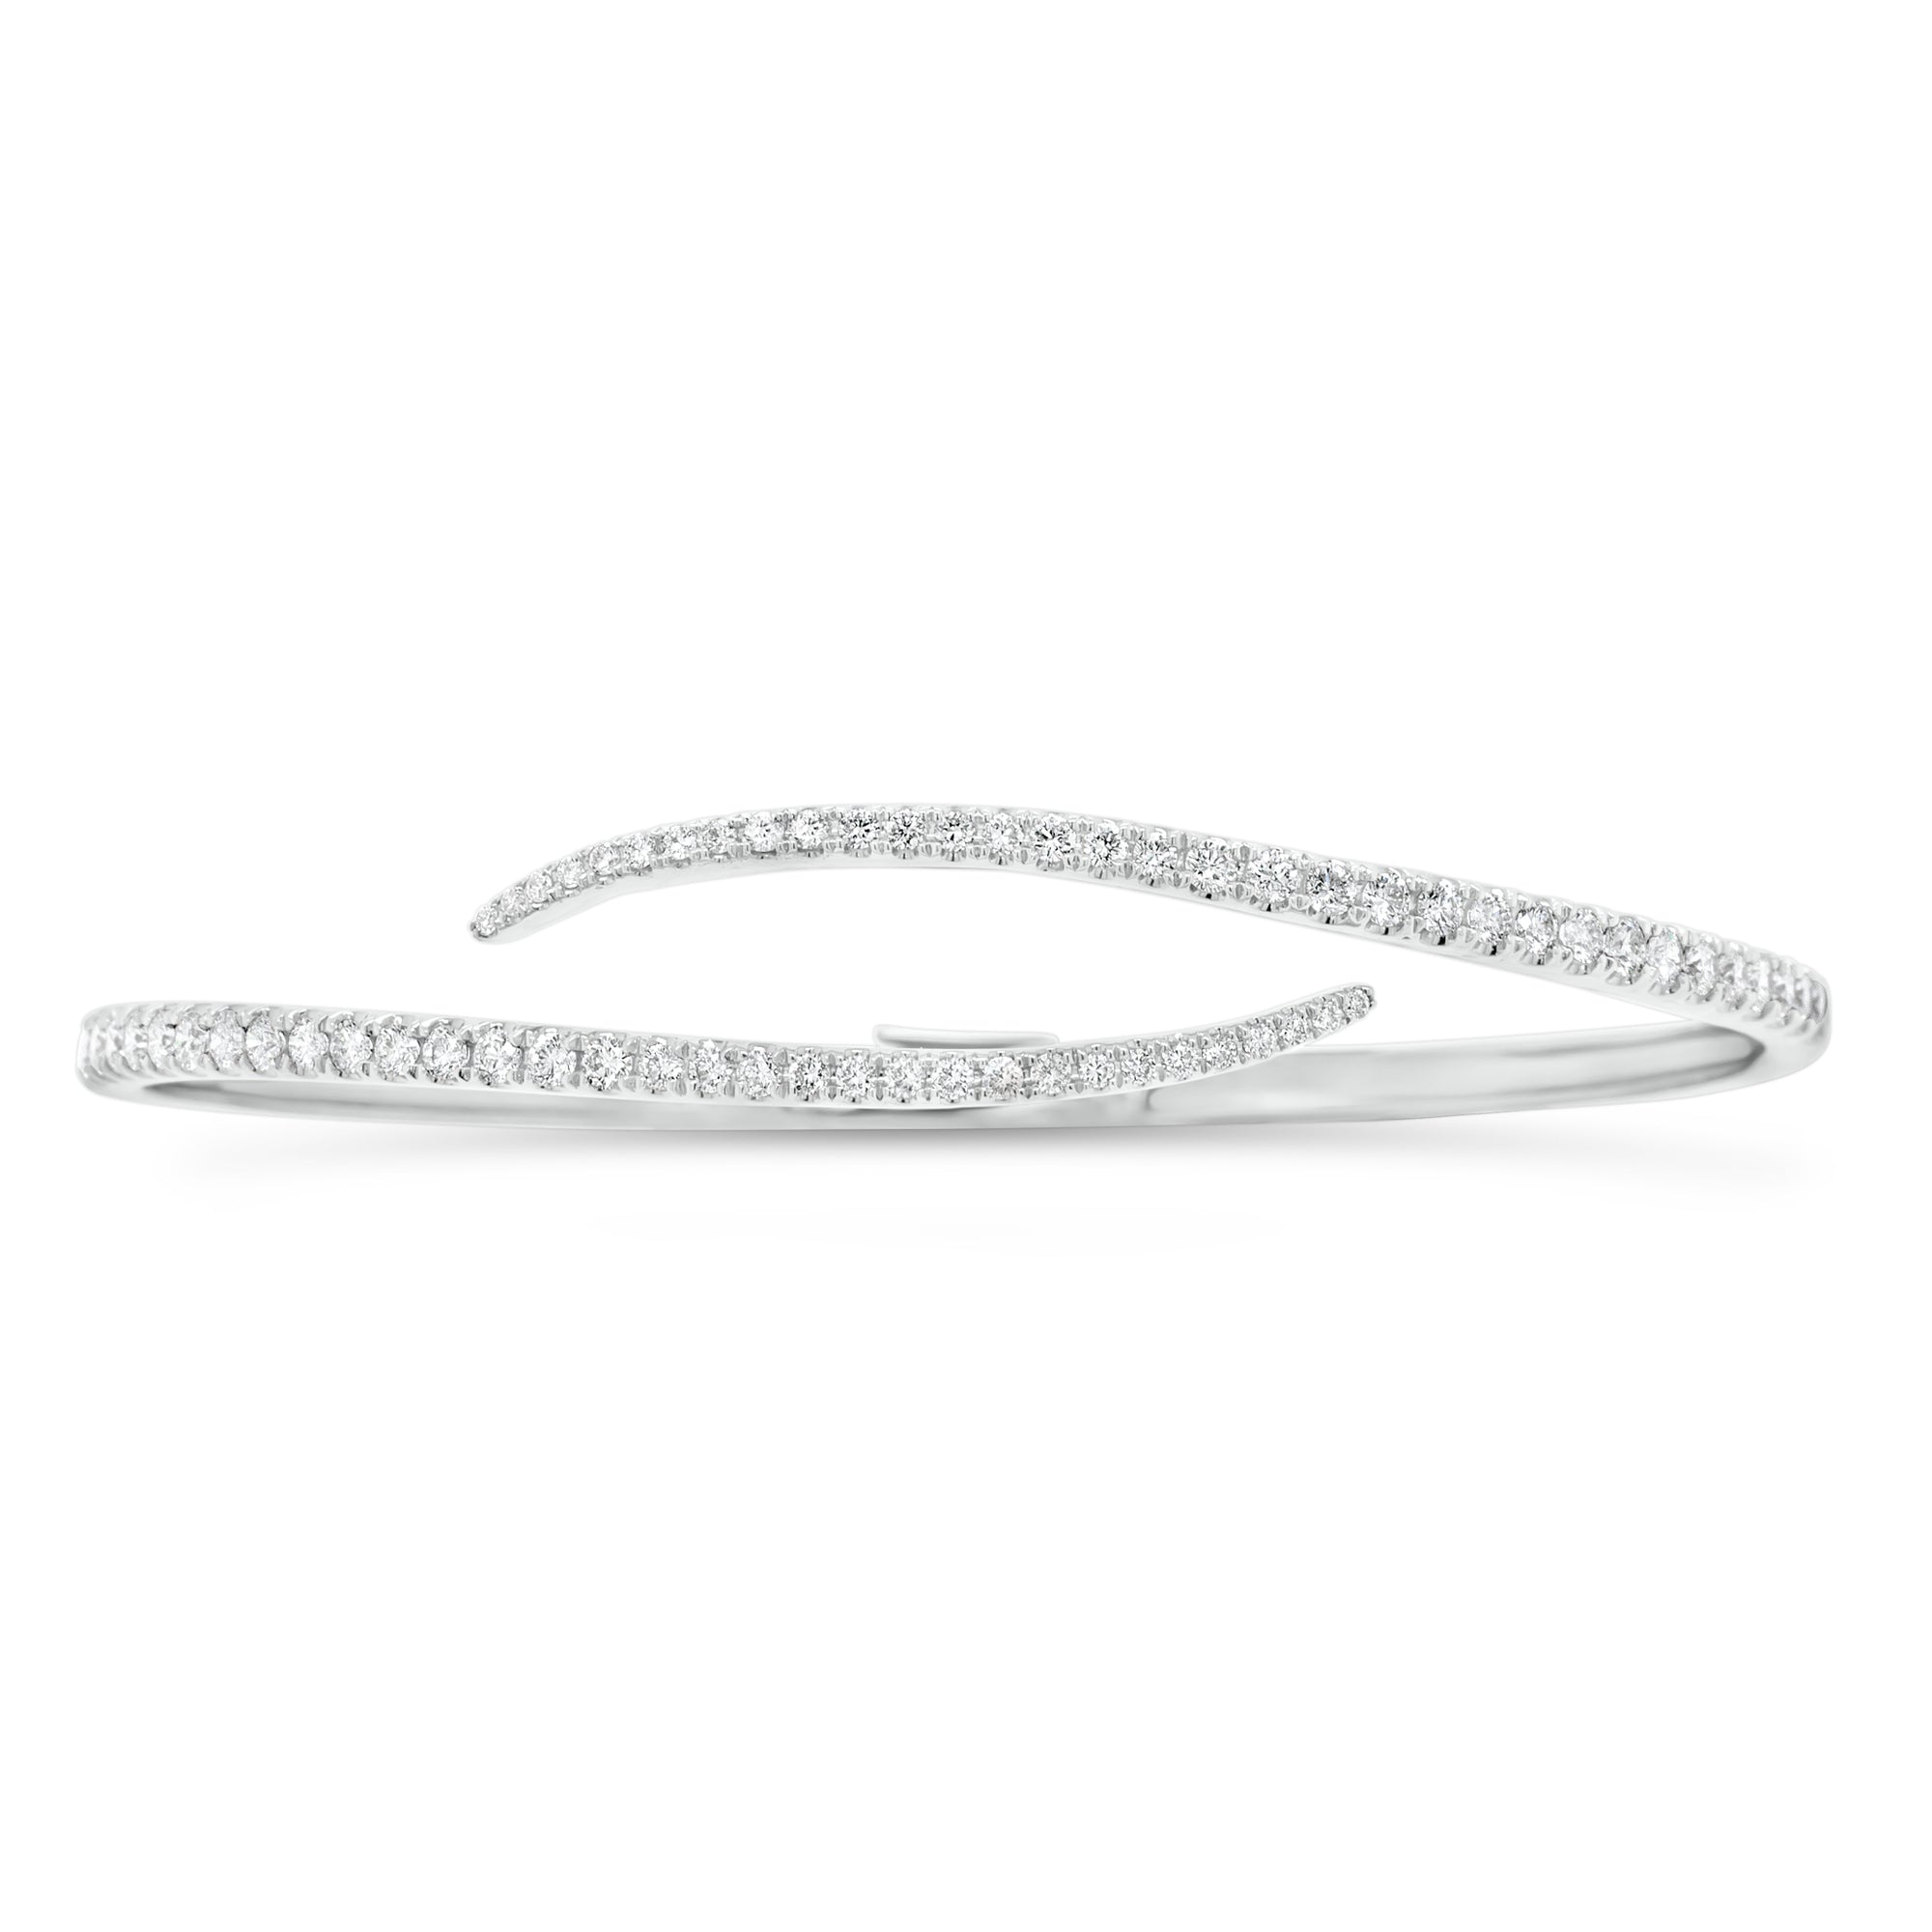 Diamond Slim Bypass Bracelet - 14 kt rose gold weighing 6.73 grams - 66 round diamonds totaling 0.98 carats